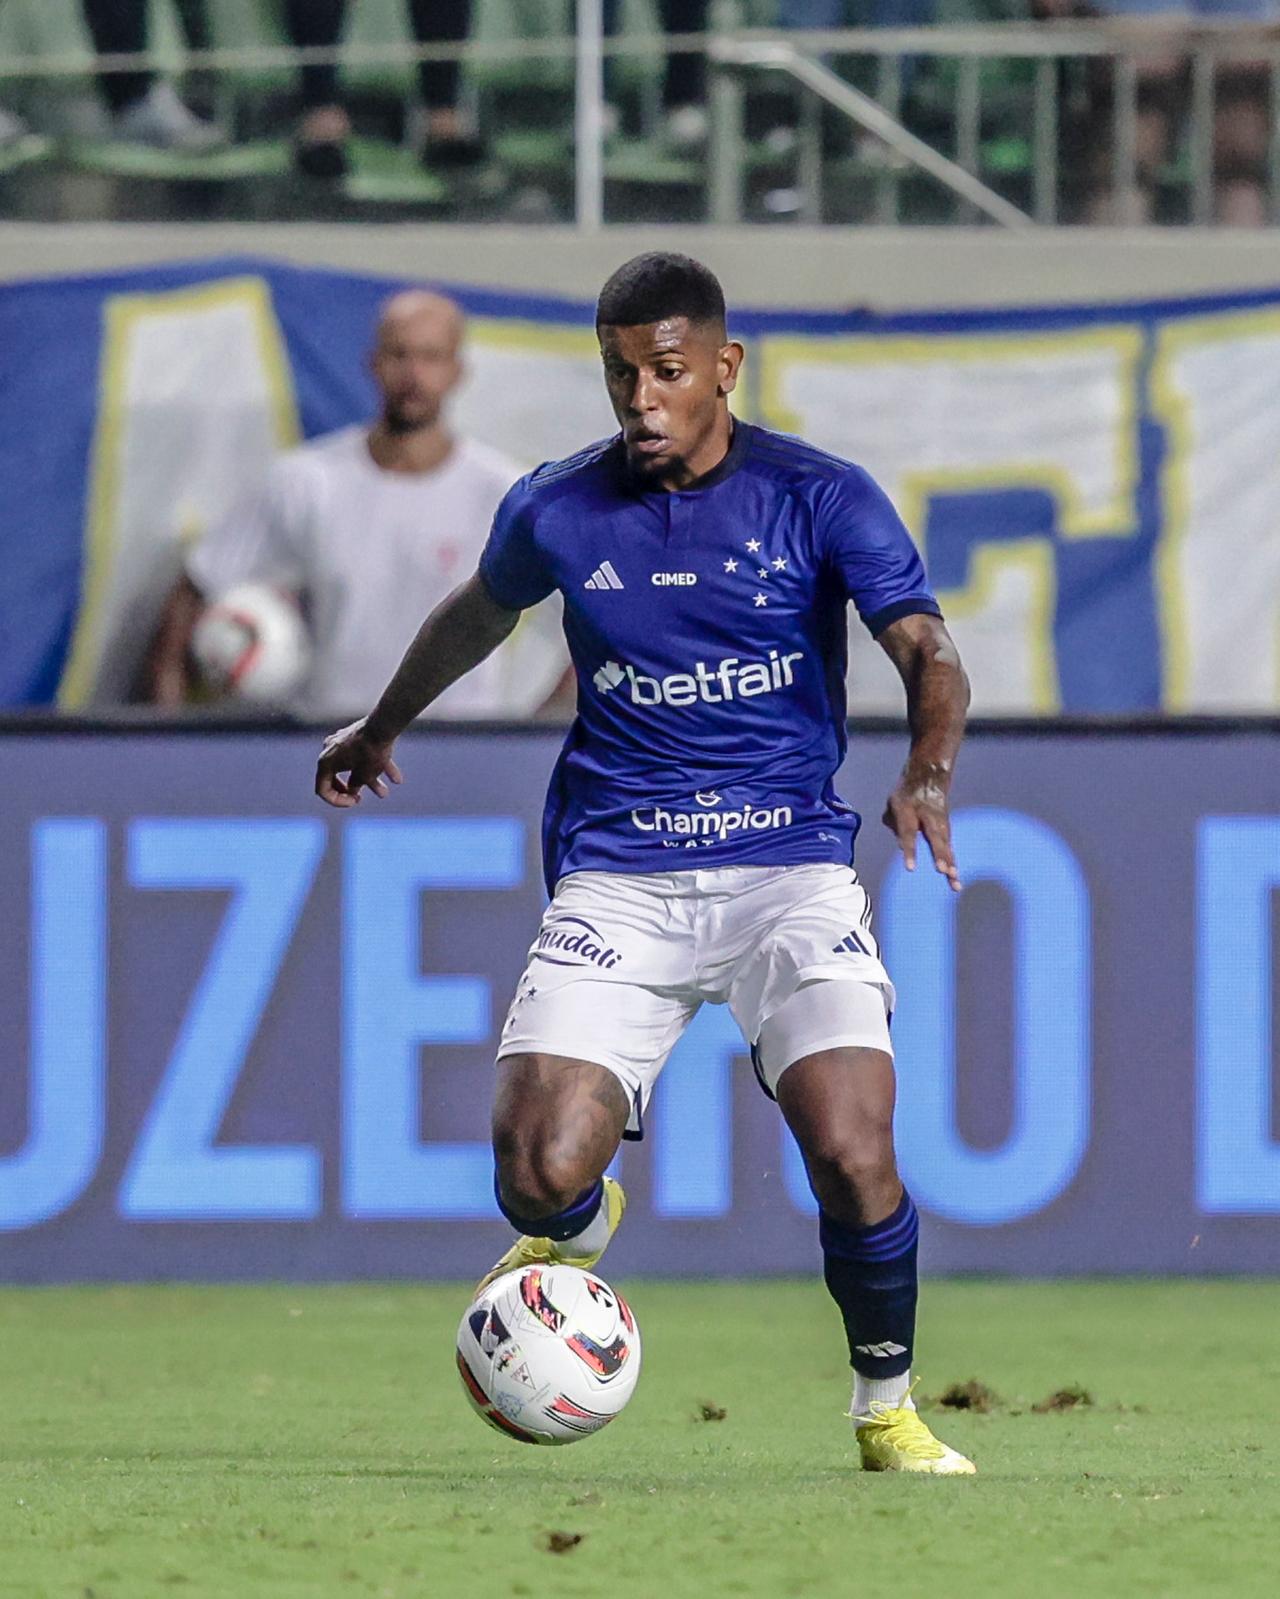 No Cruzeiro, Wesley Gasolina passa por cirurgia no joelho direito